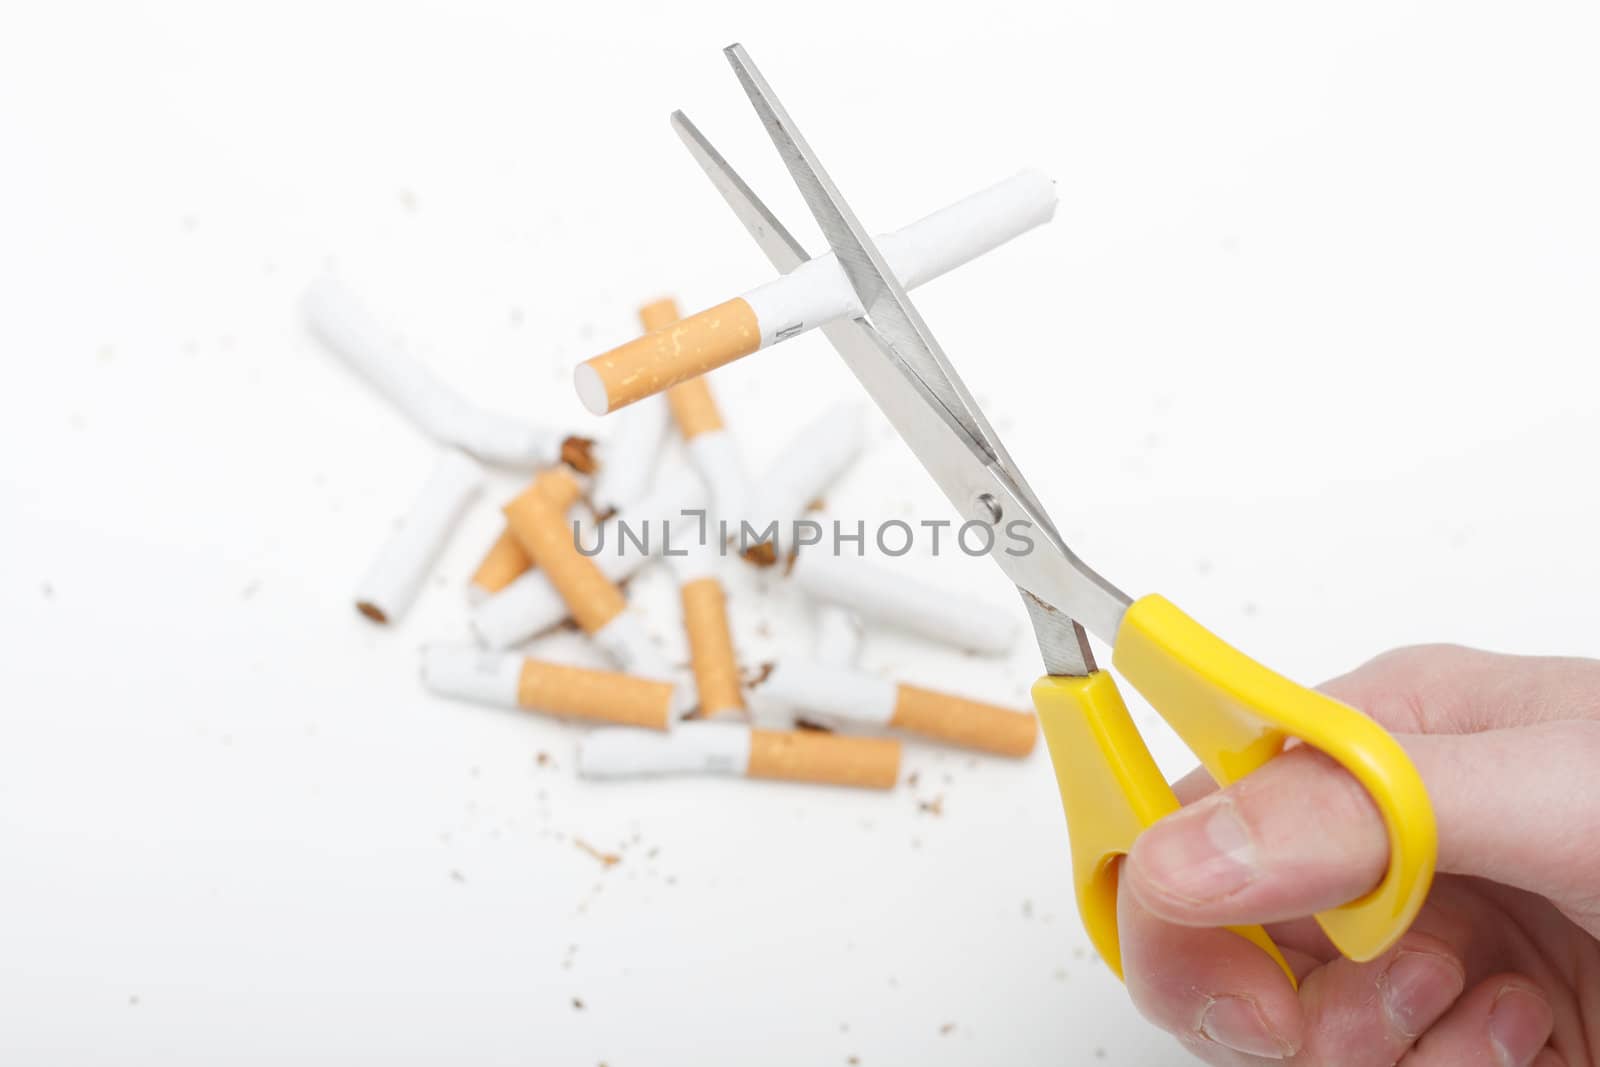 A hand cutting cigarettes